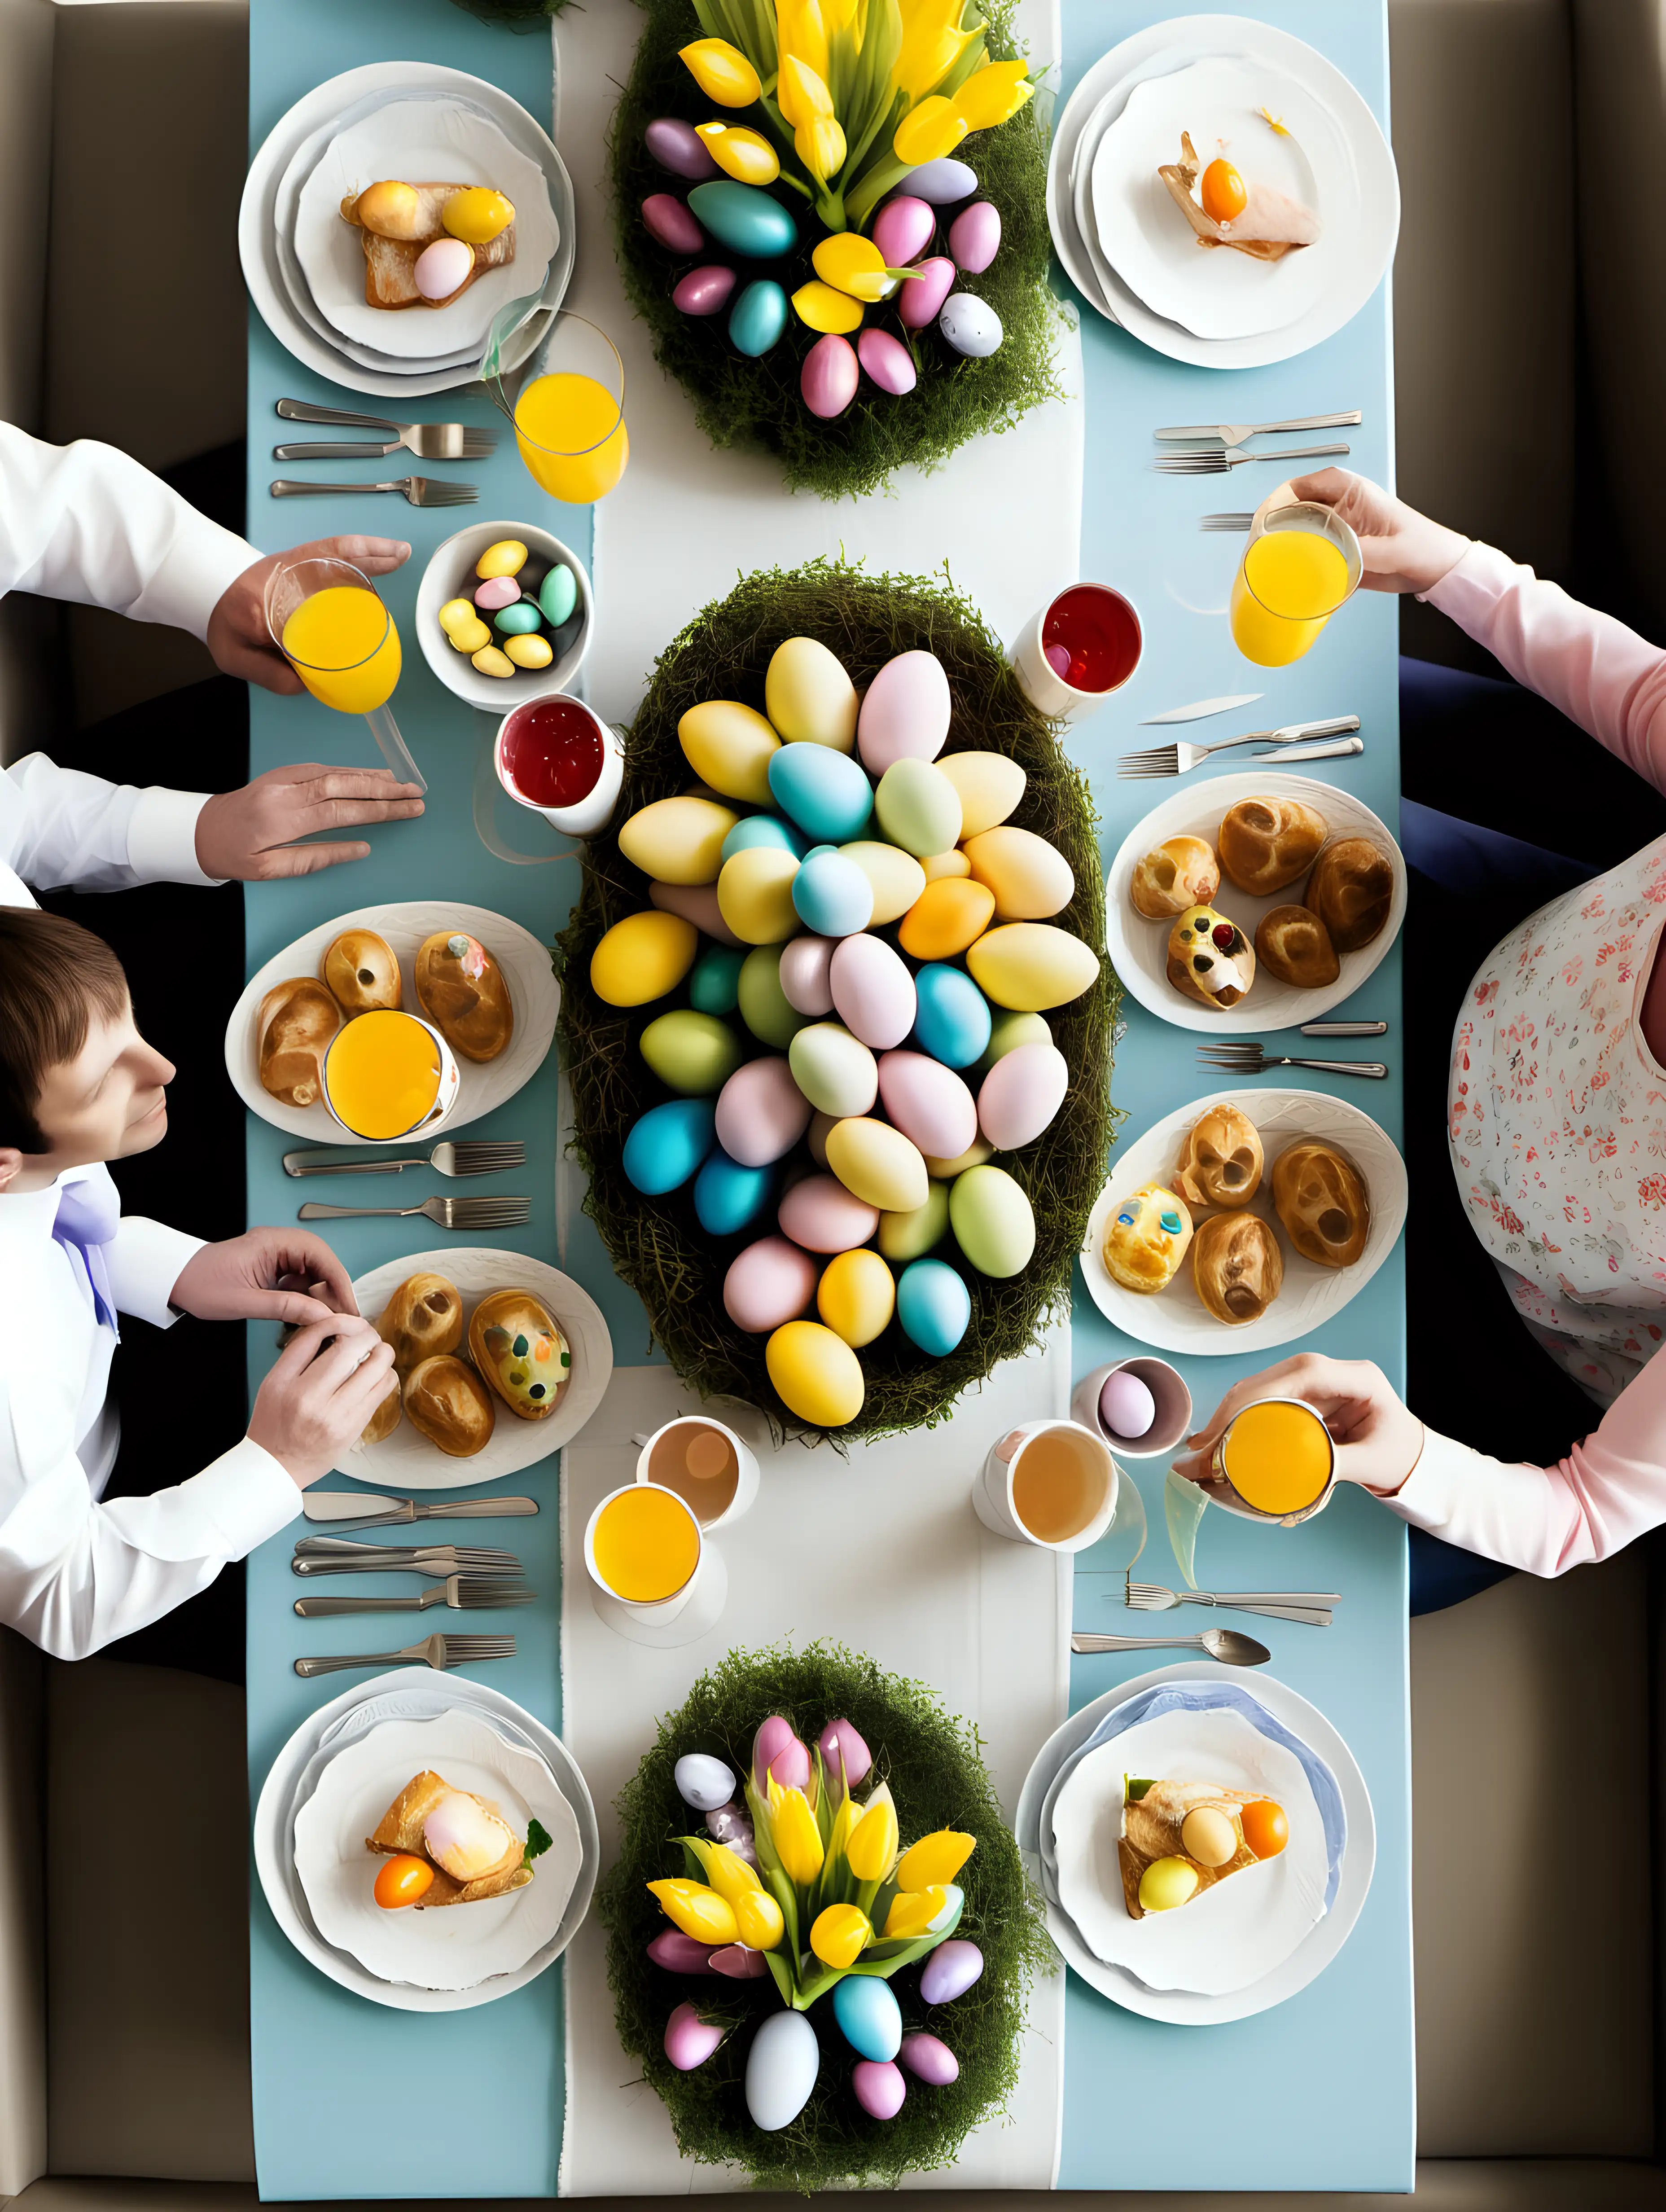 A family gathering for an Easter brunch or dinner